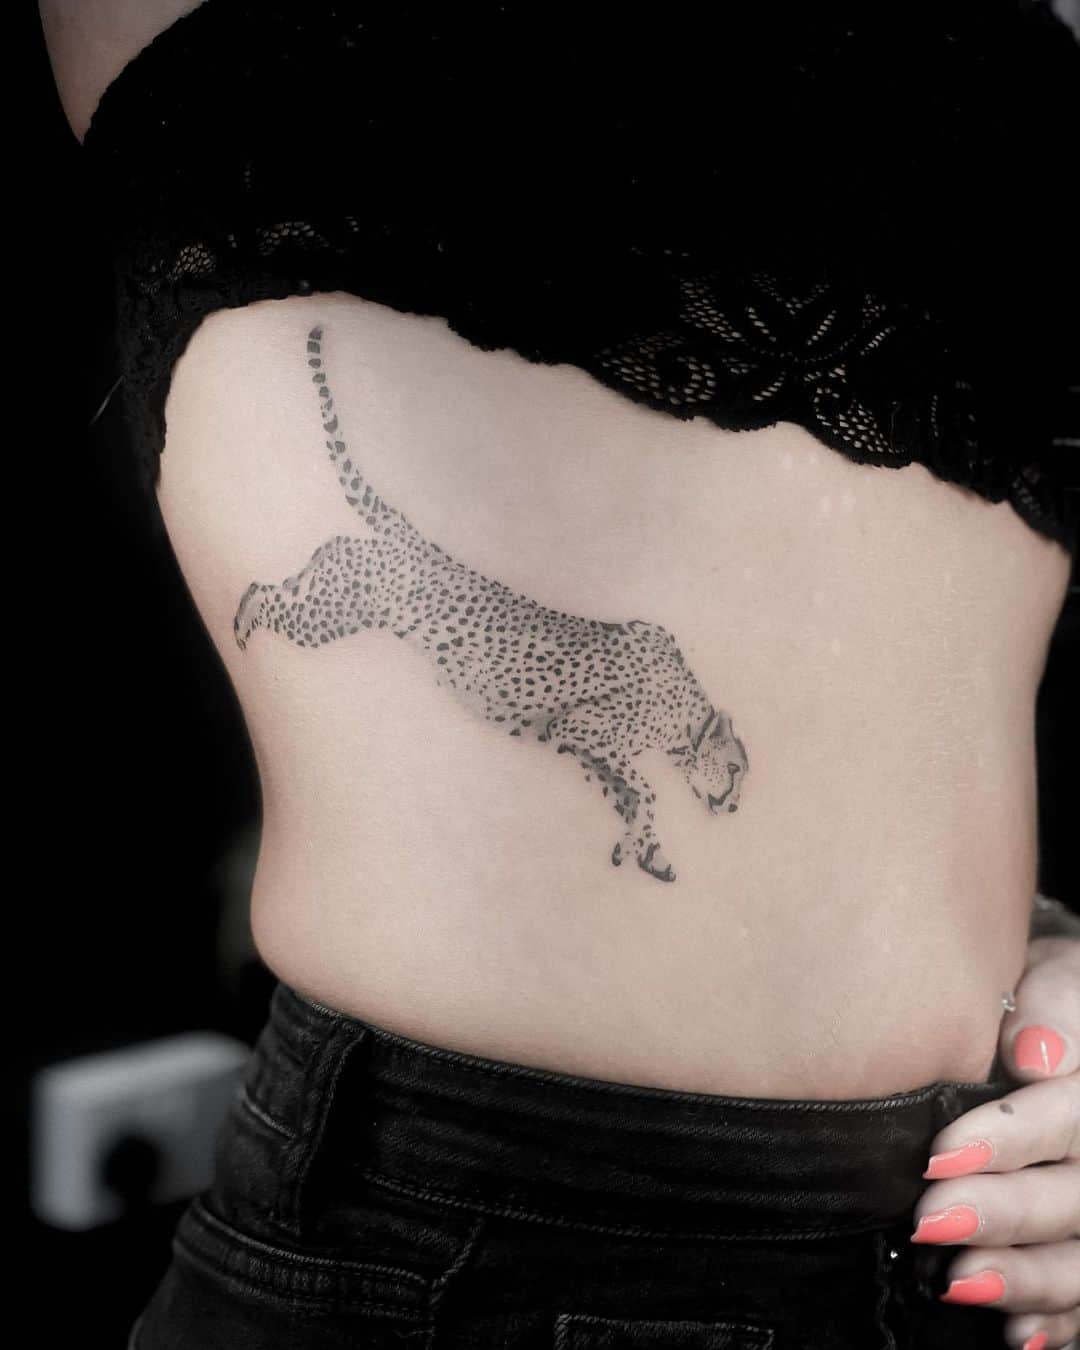 Fineline leopard tattoo onr ibs by ecclesdantattoos